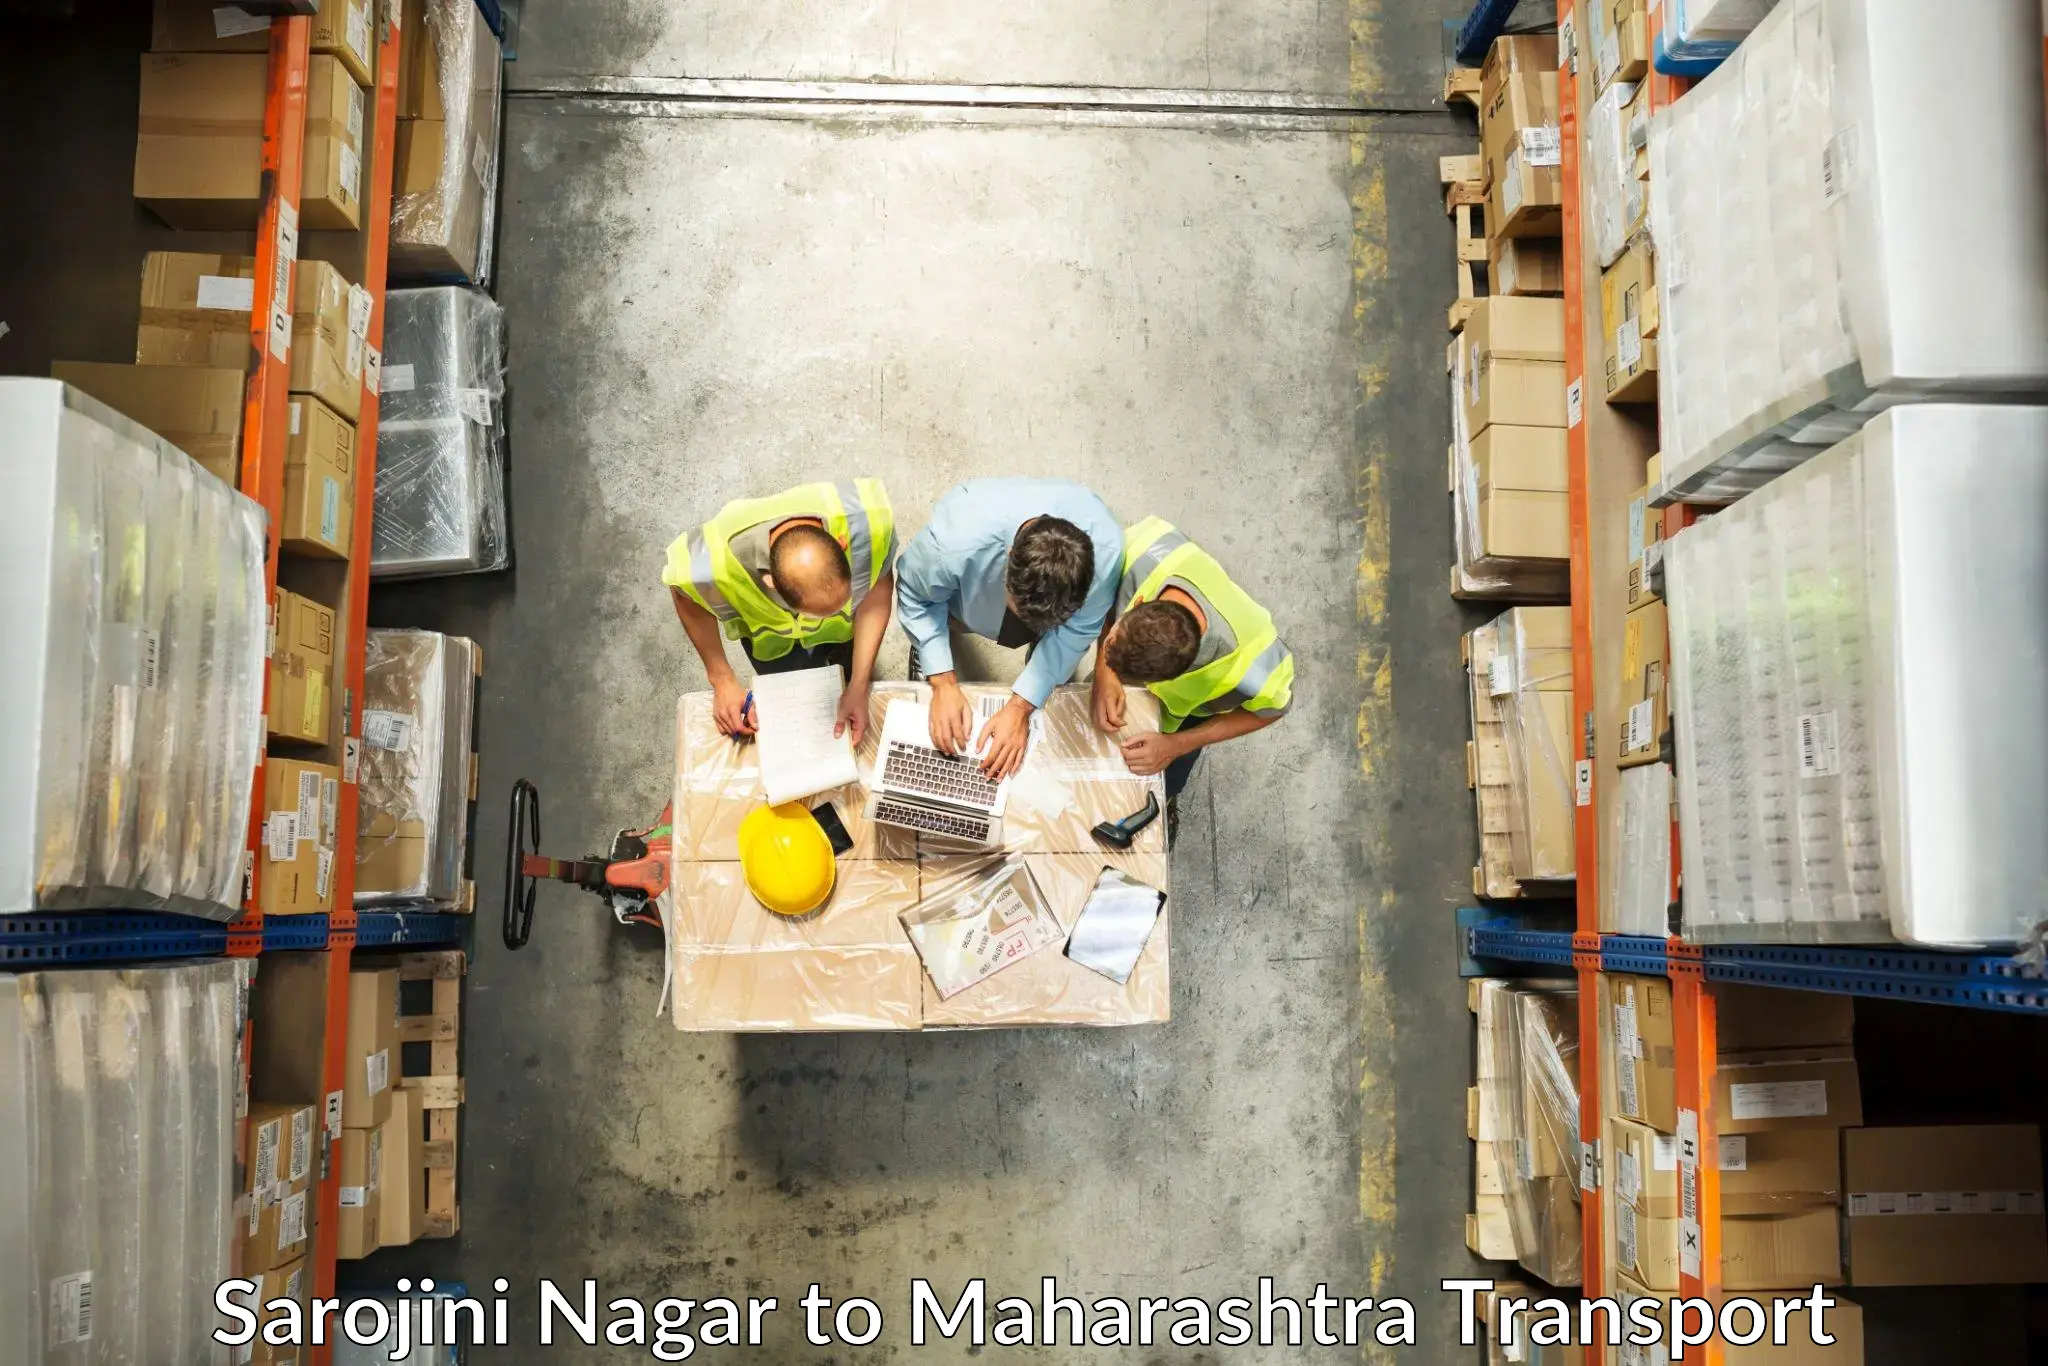 Truck transport companies in India Sarojini Nagar to Ambajogai